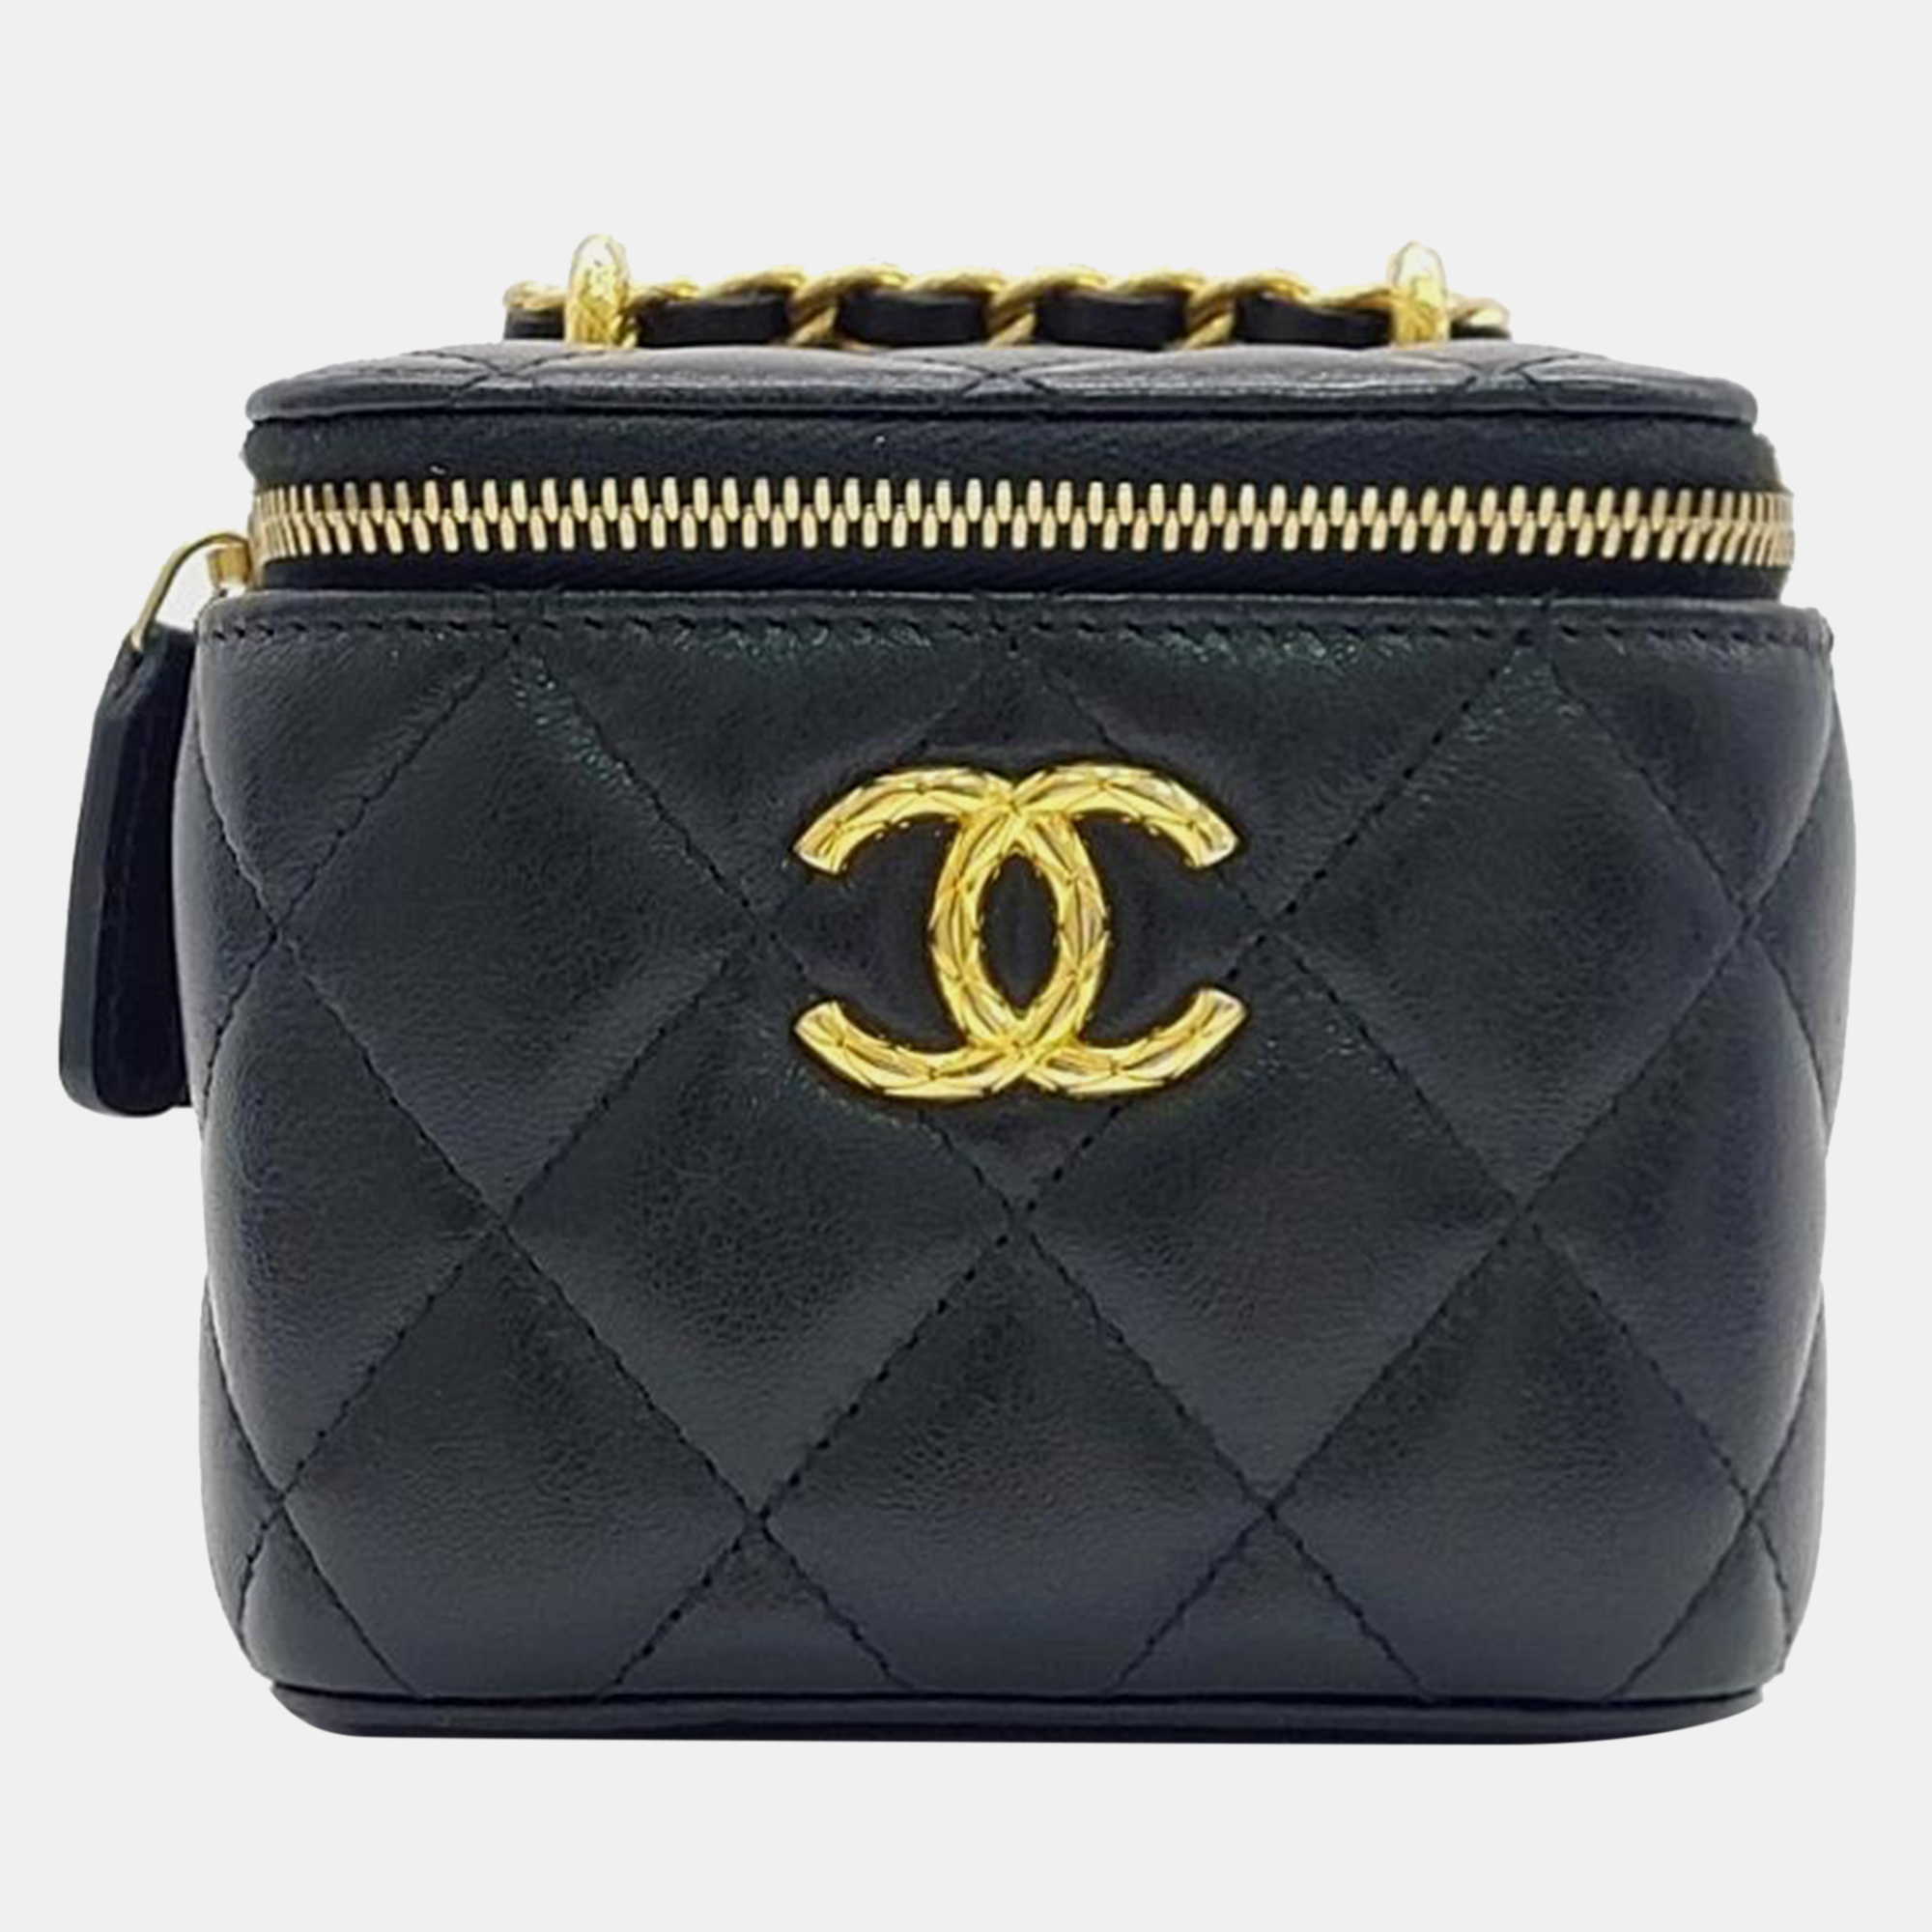 Chanel vanity mini crossbody bag